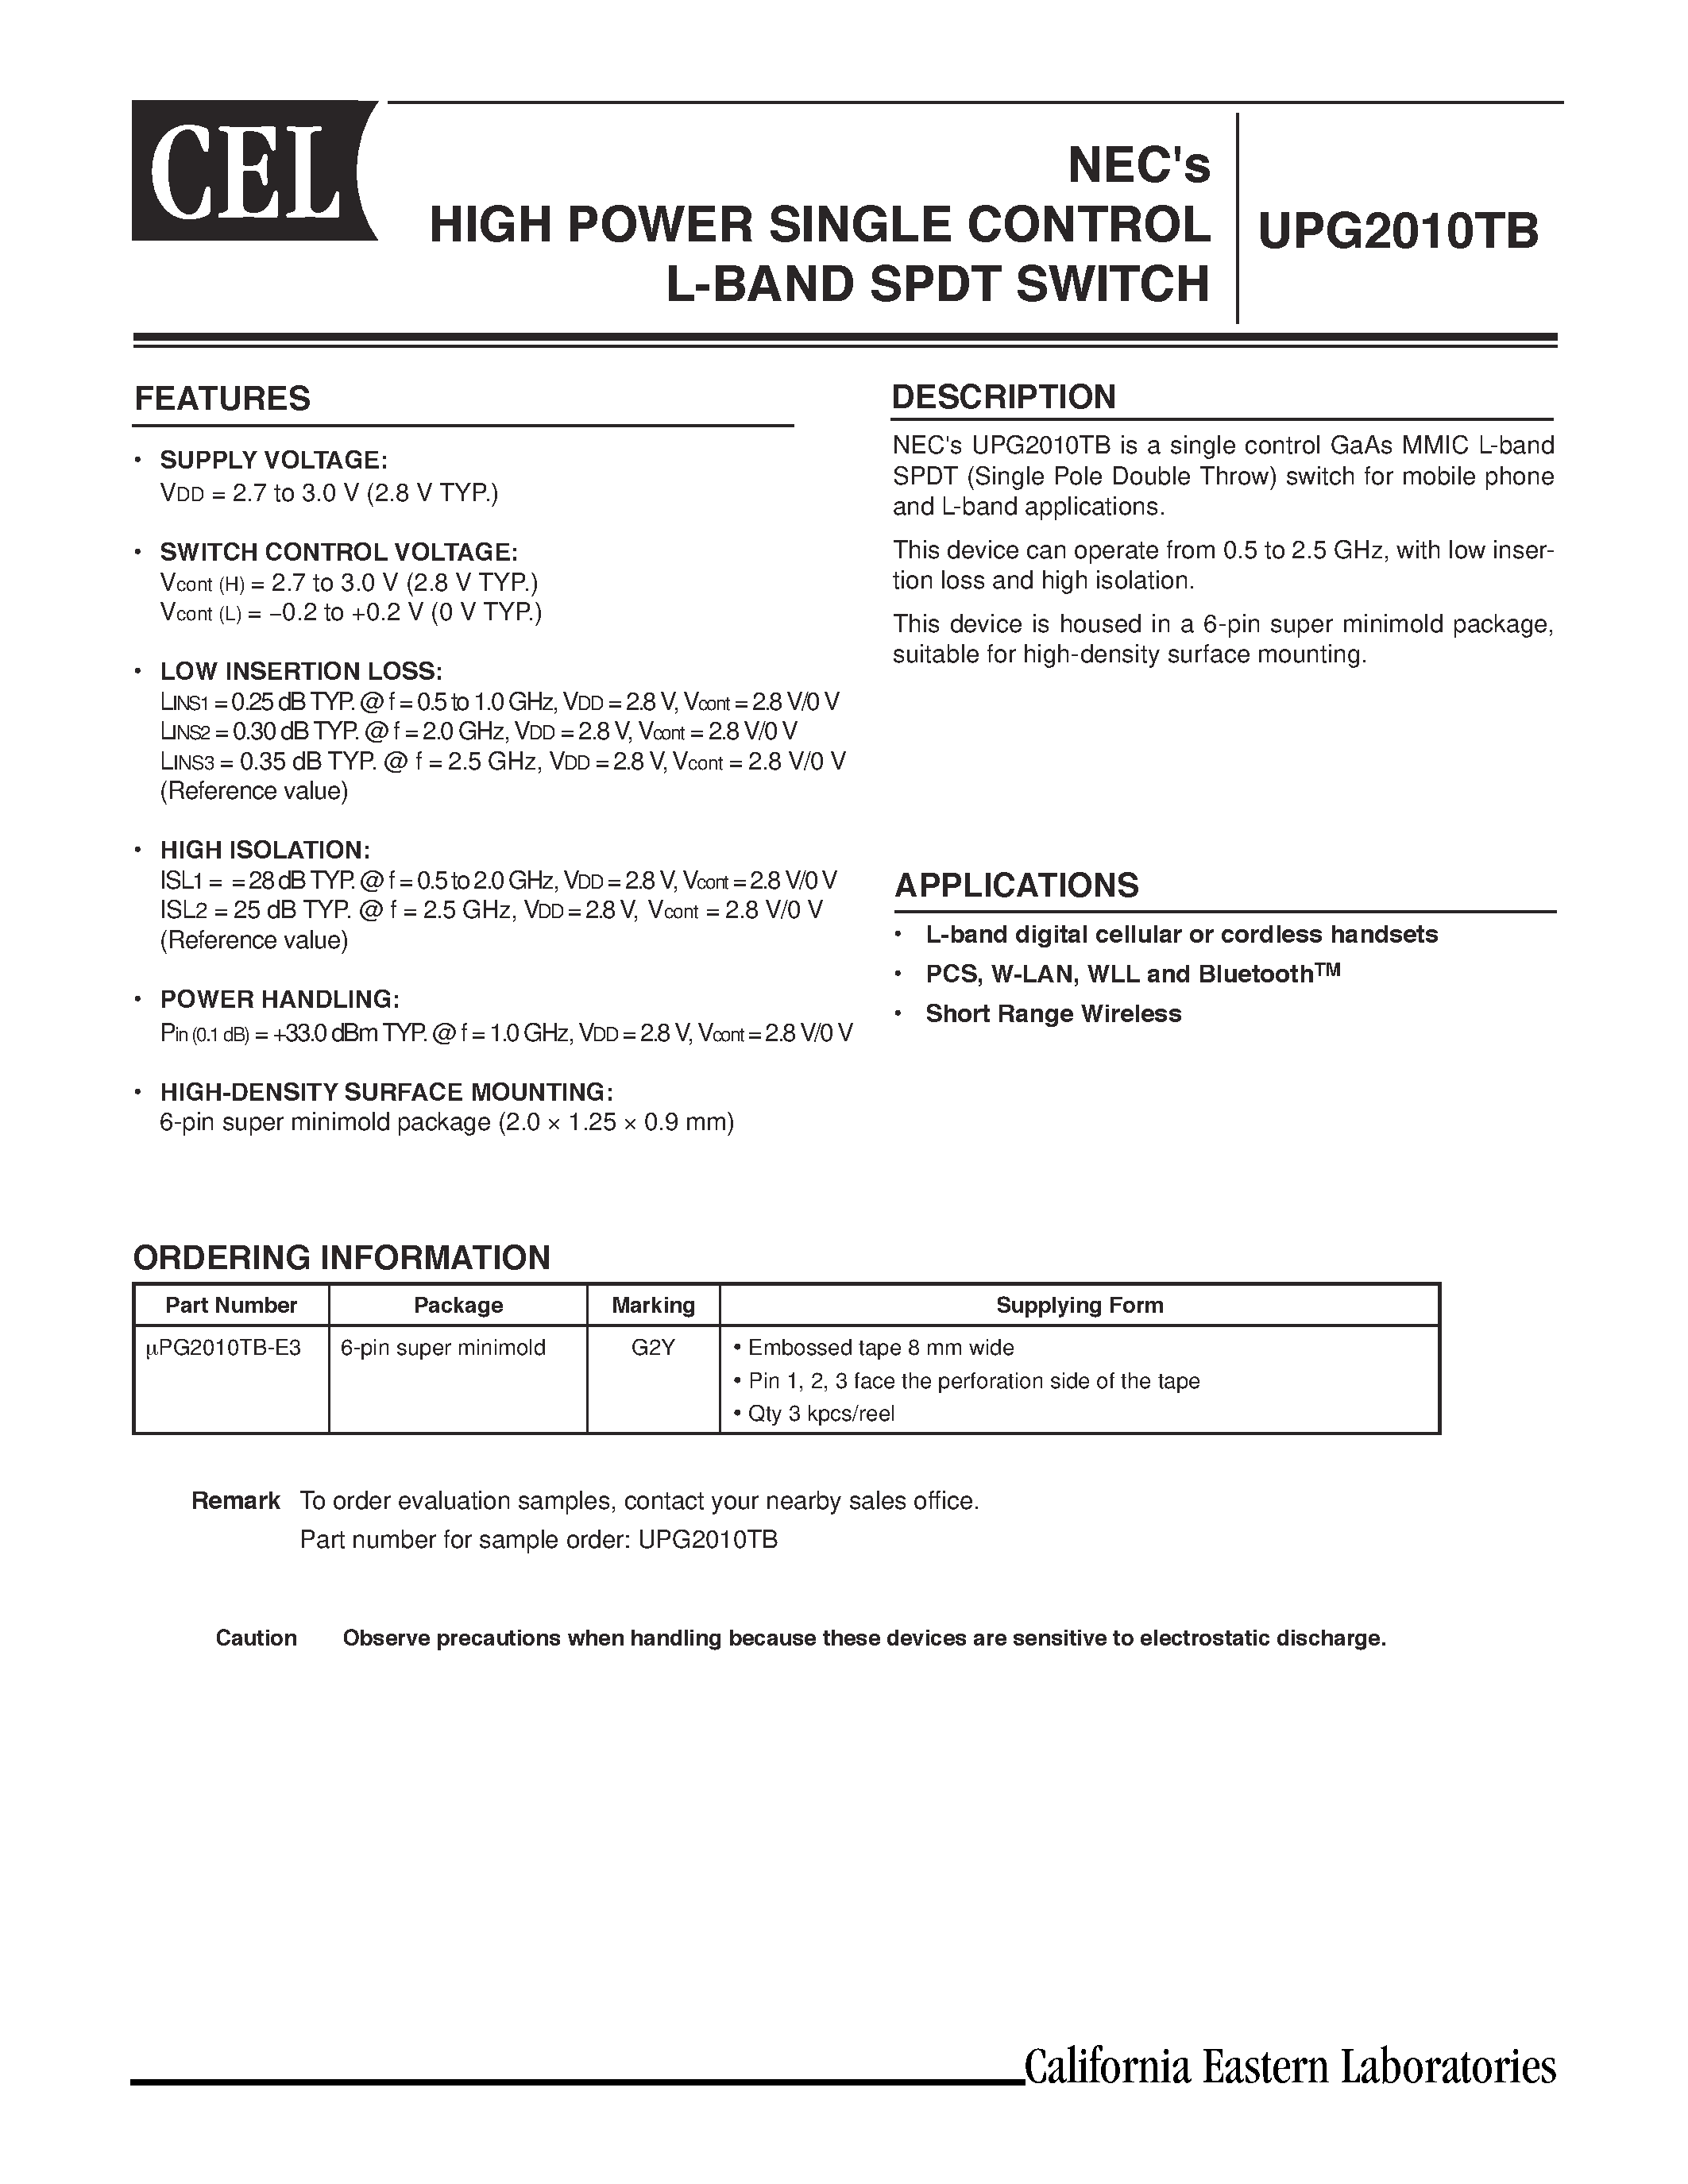 Datasheet UPG2010TB - NECs HIGH POWER SINGLE CONTROL L-BAND SPDT SWITCH page 1